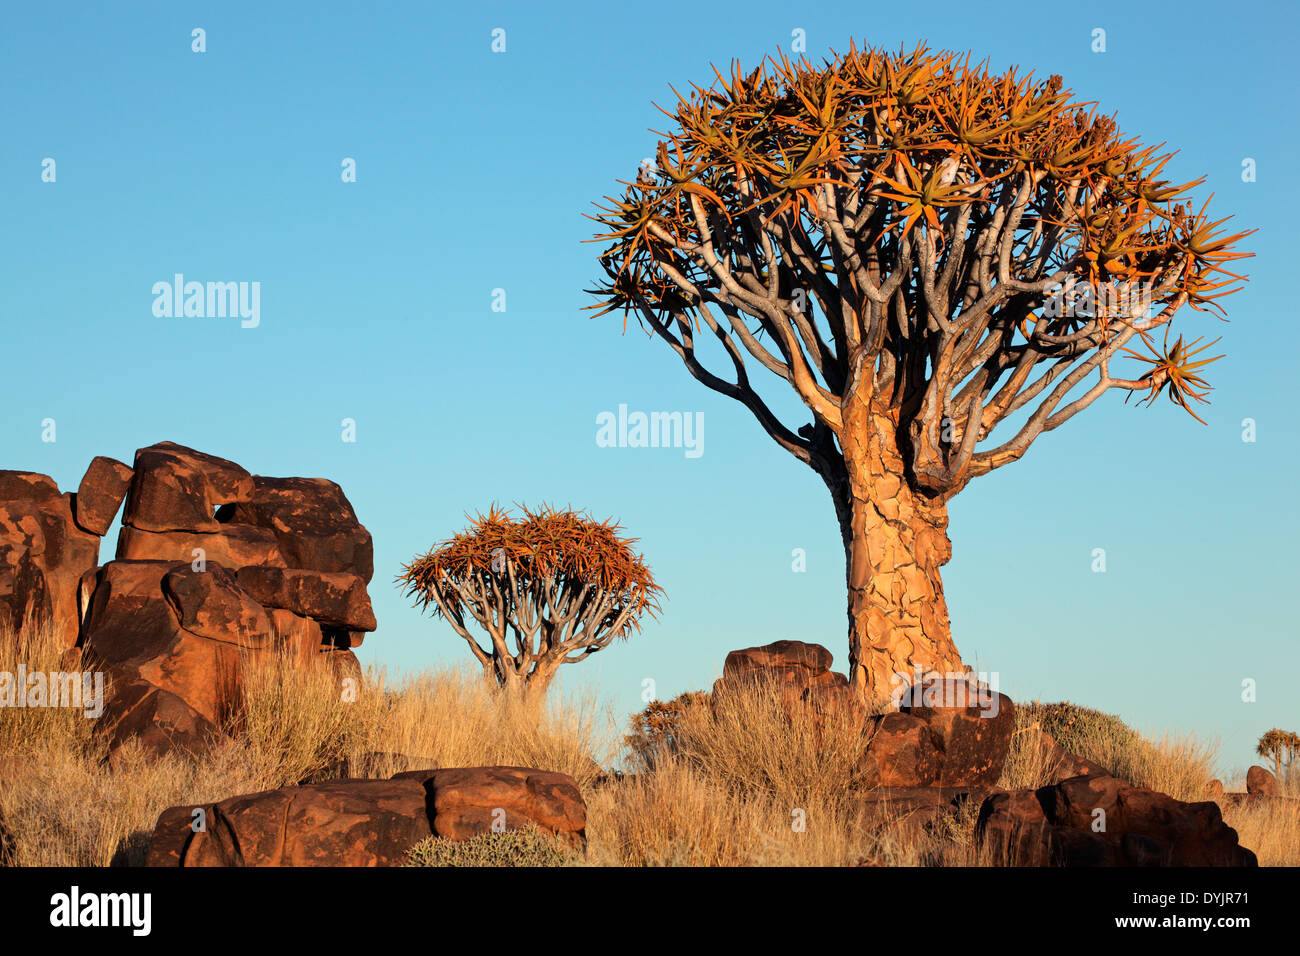 Wüstenlandschaft mit Granitfelsen und Köcher Bäume (Aloe Dichotoma), Namibia Stockfoto